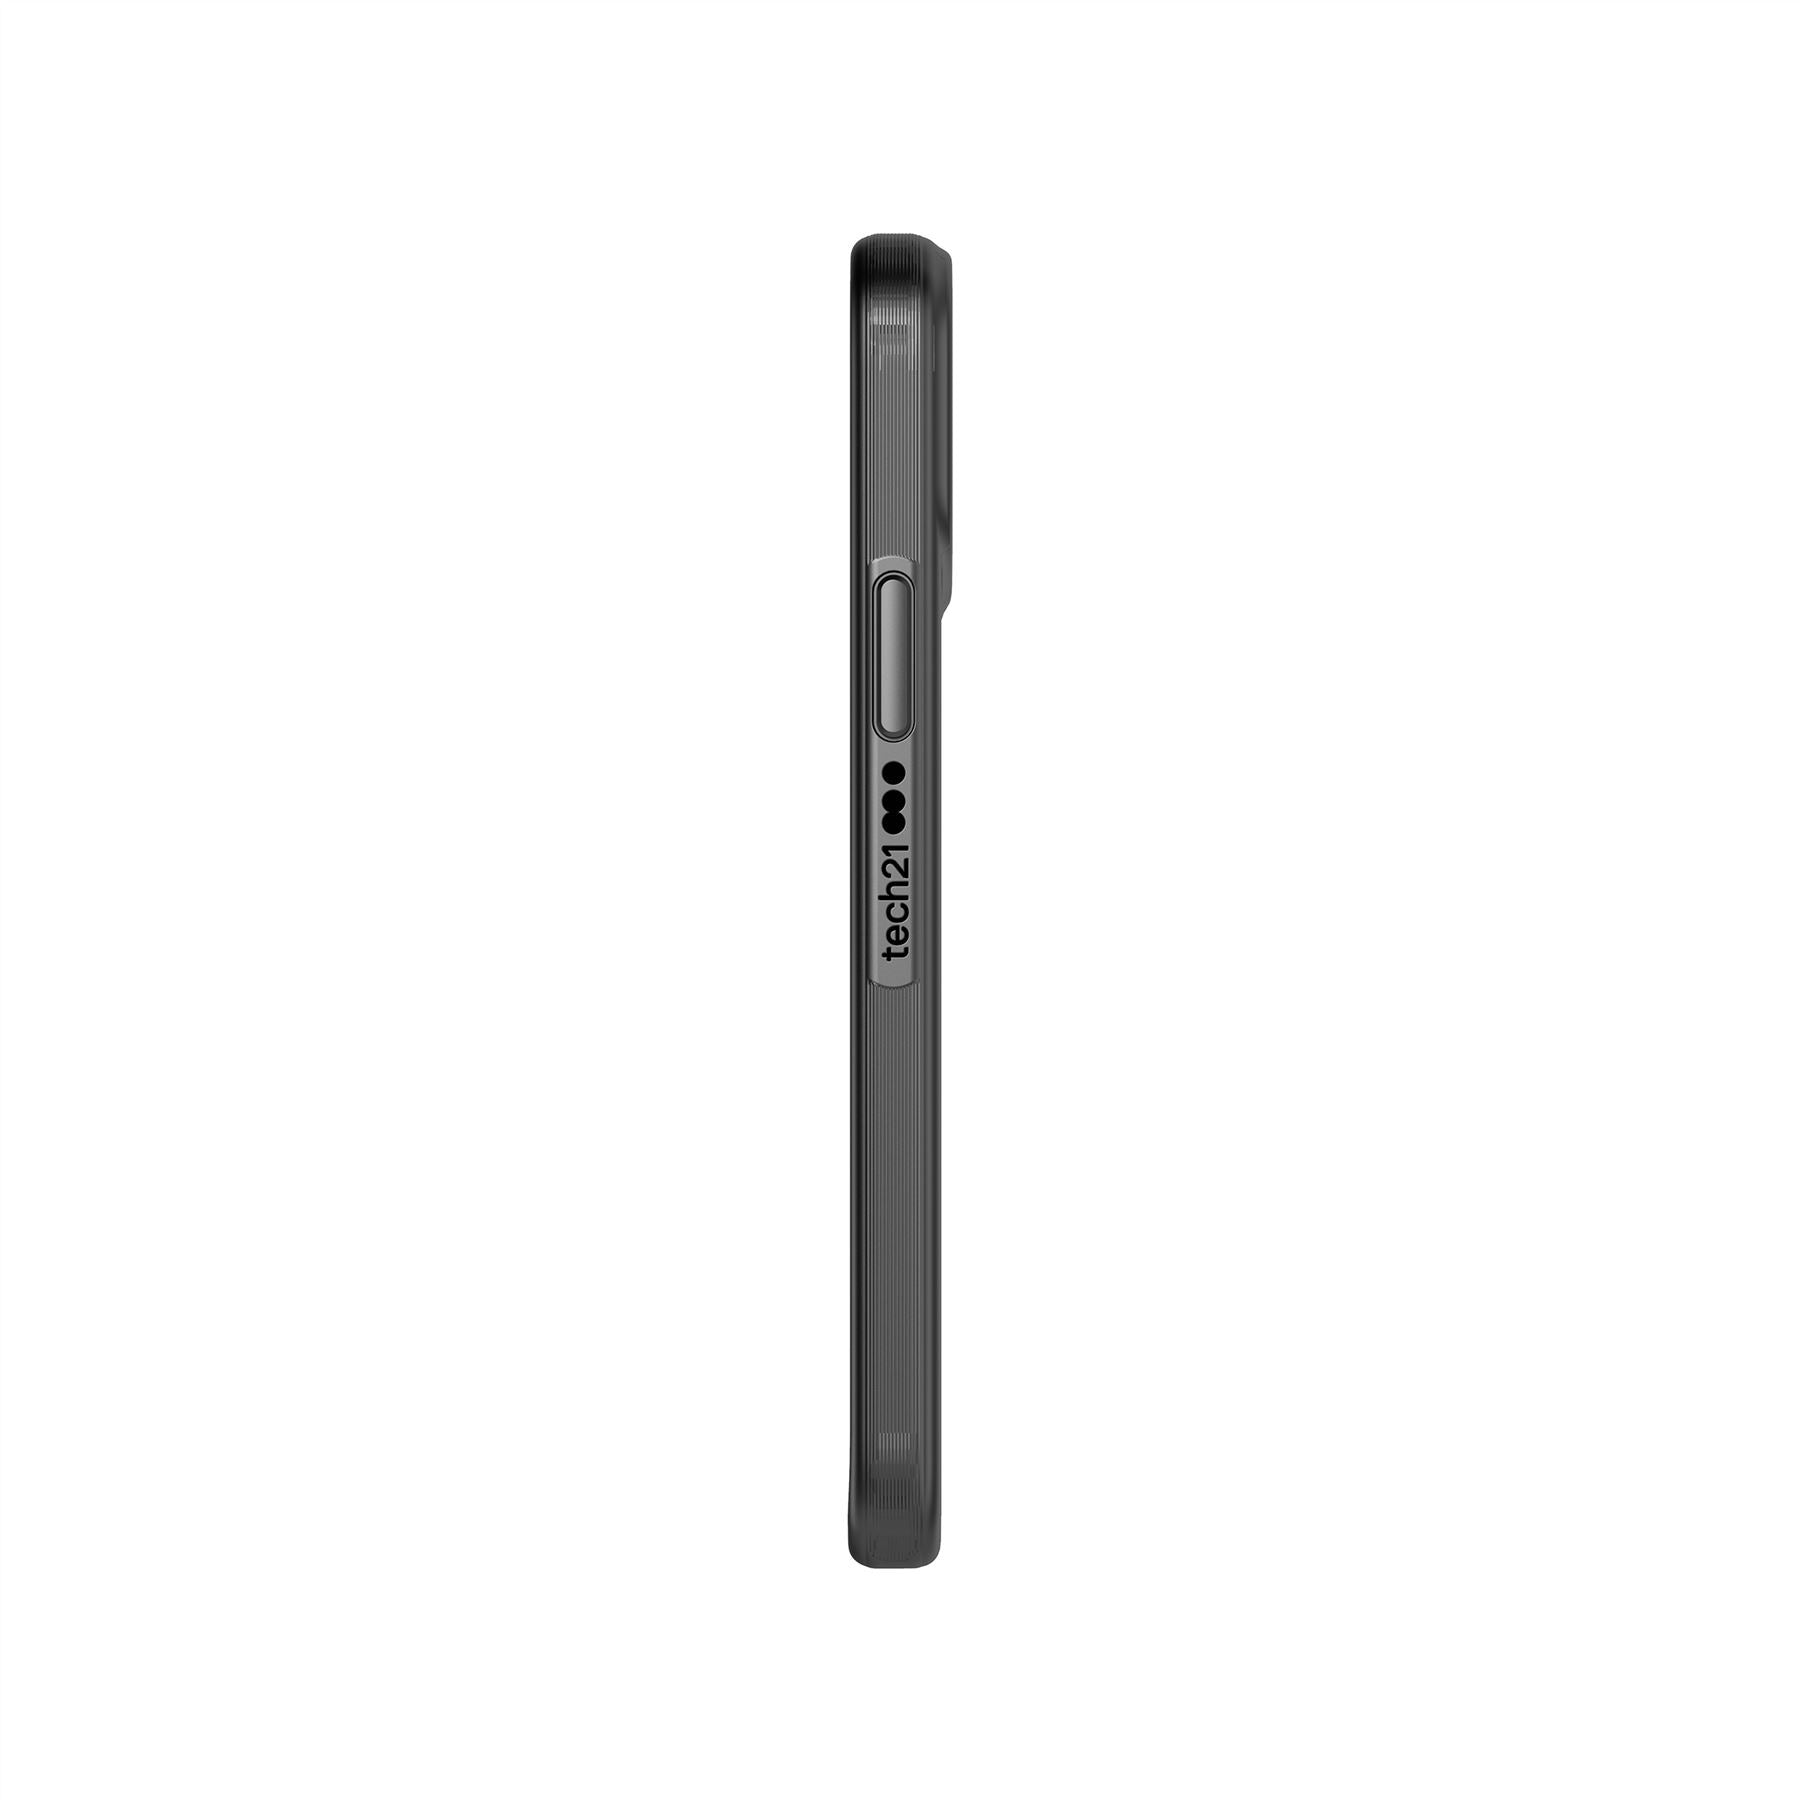 Evo Slim - Apple iPhone 12/12 Pro Case - Charcoal Black